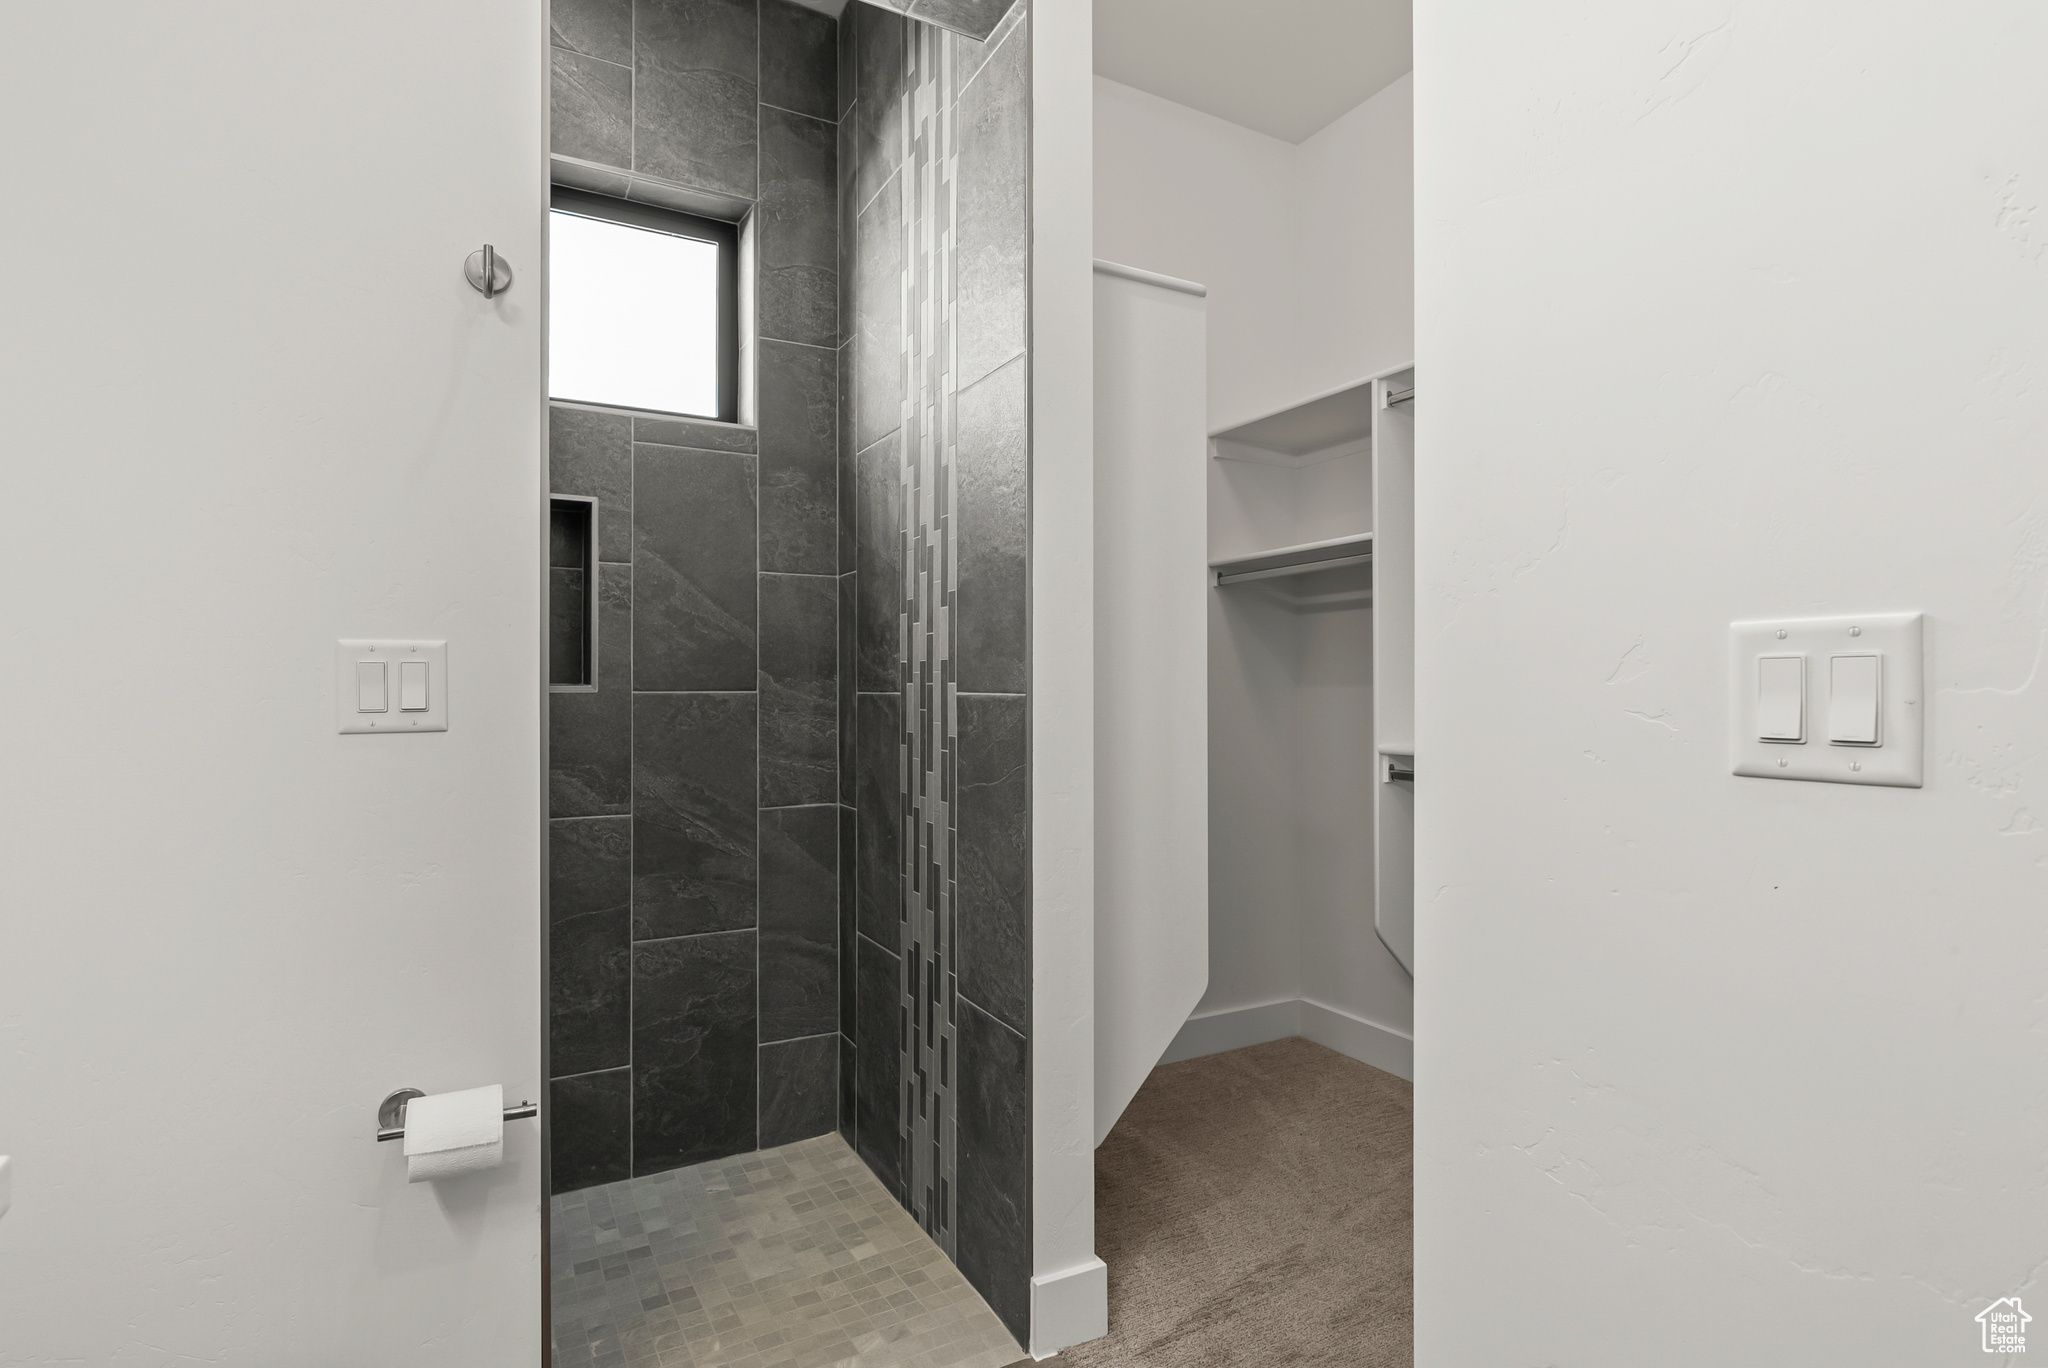 Bathroom with tiled shower, Casita Bathroom